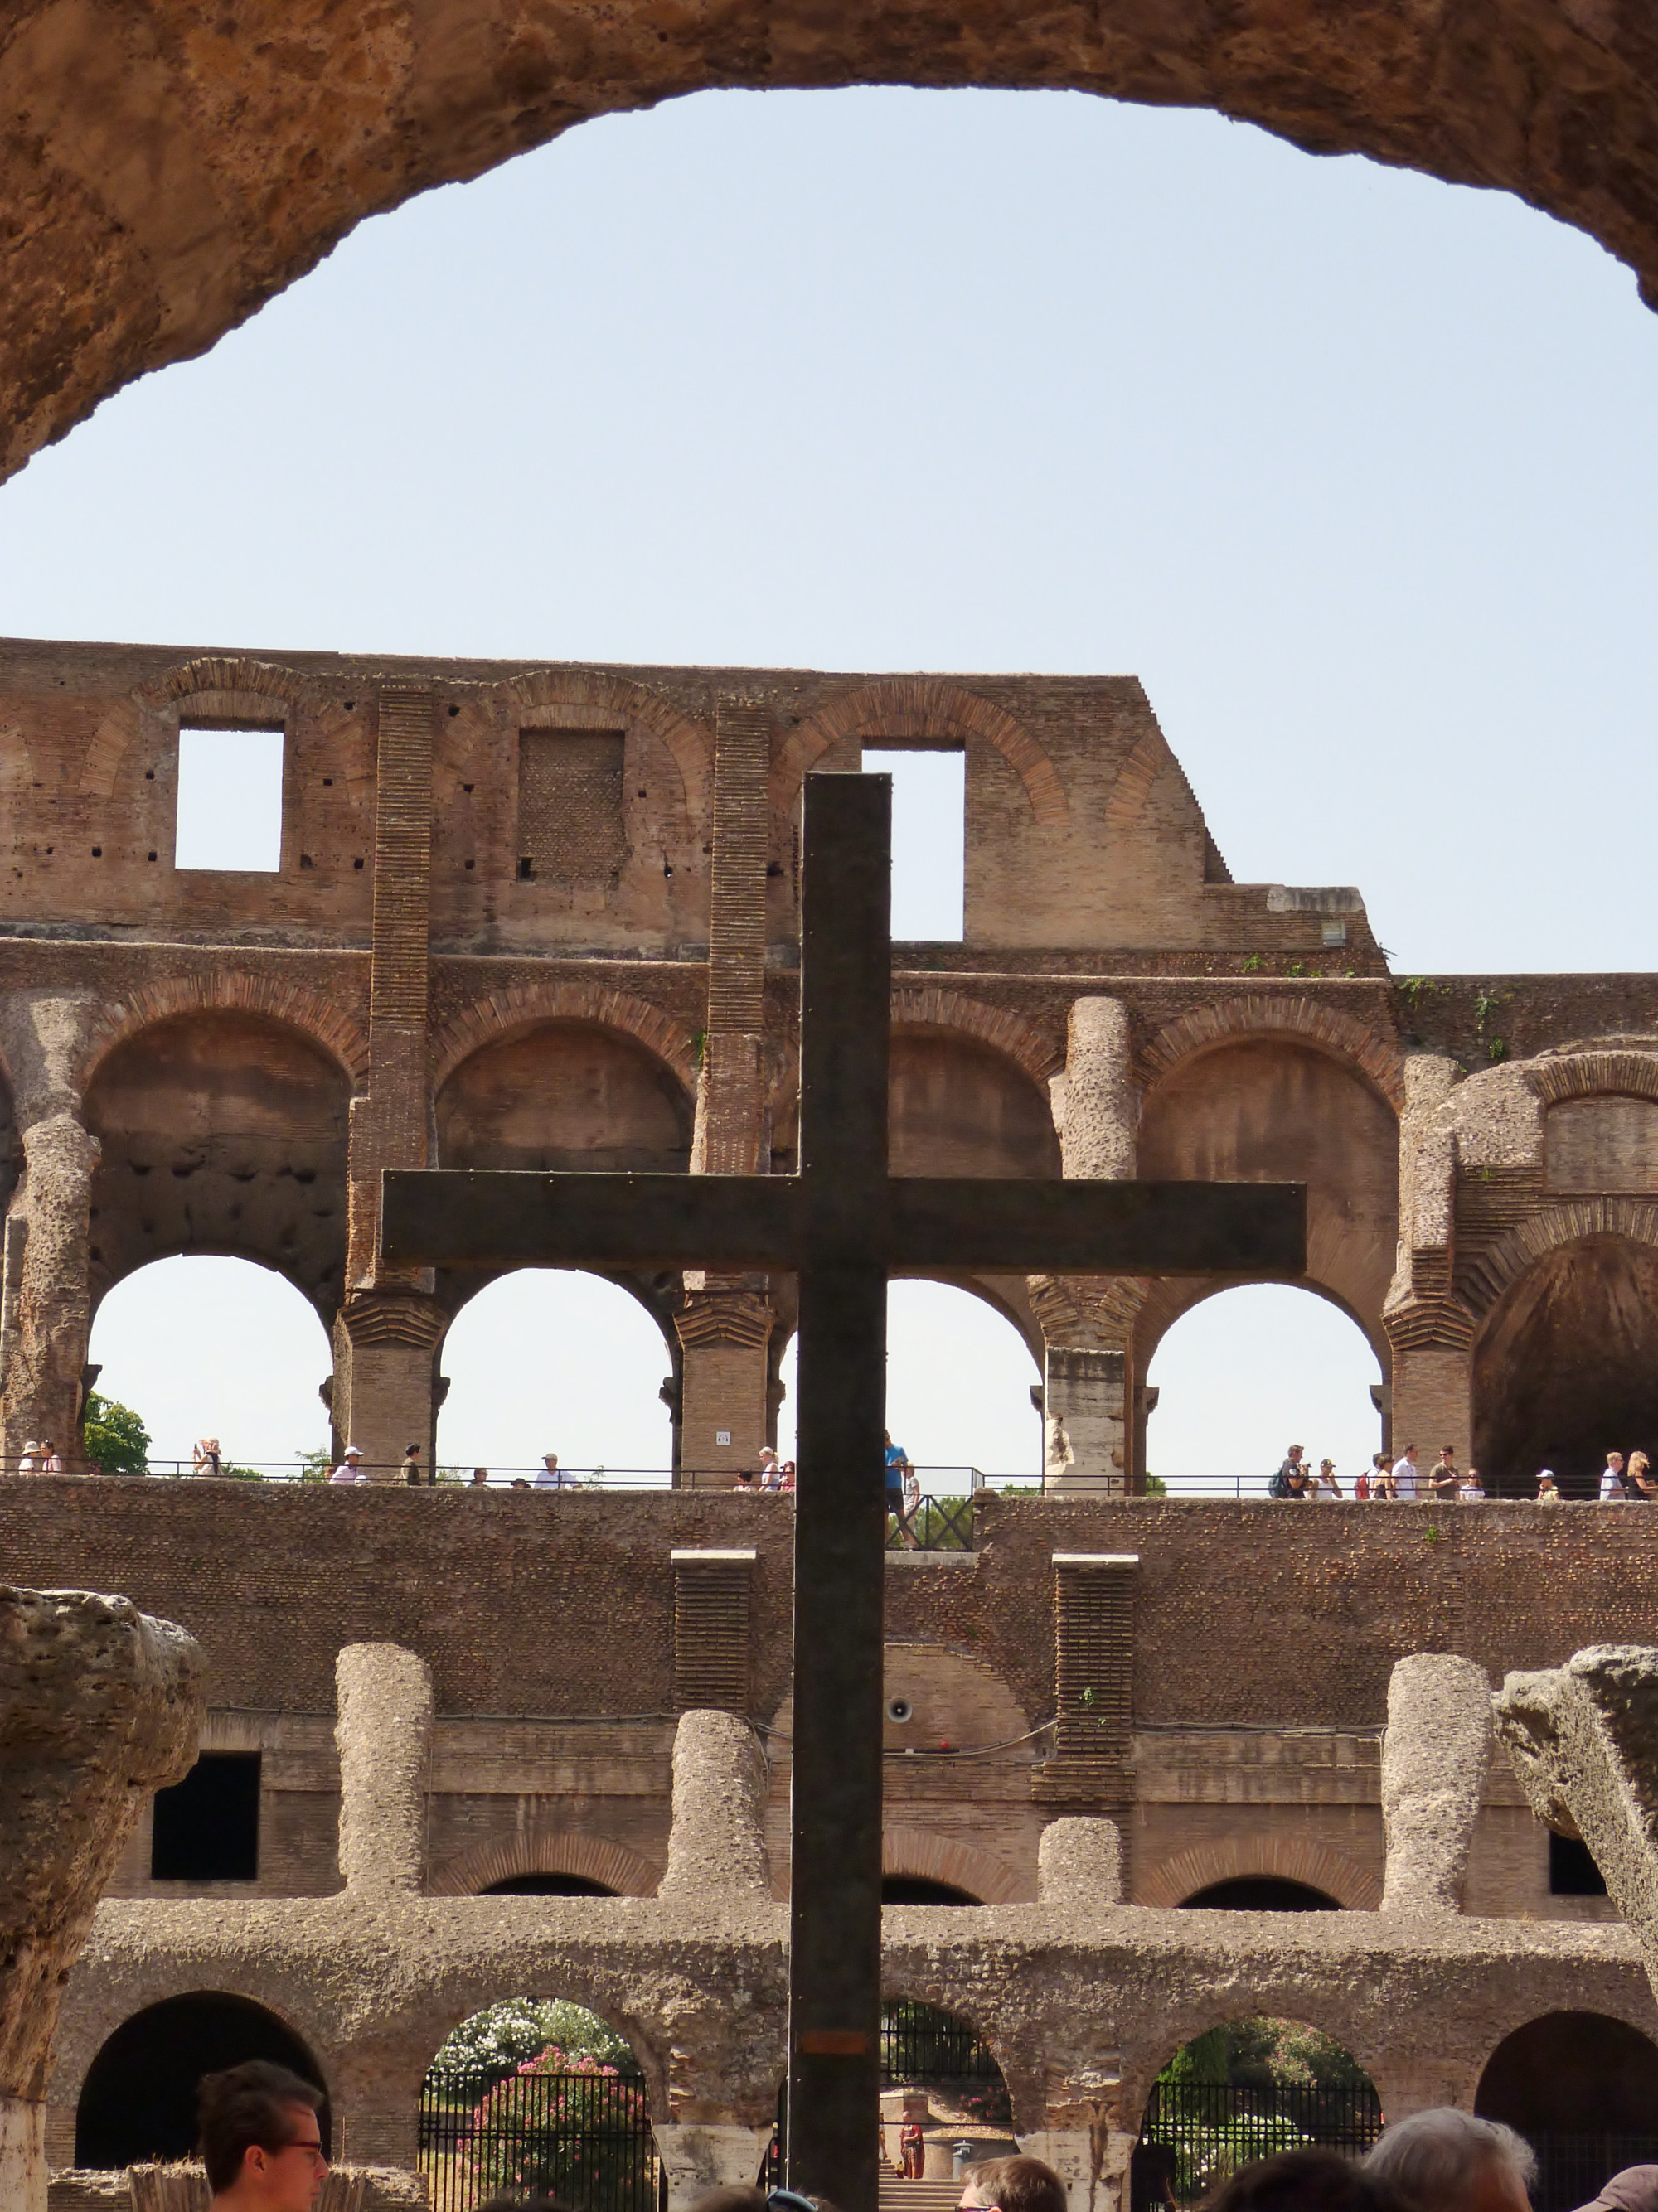 Colosseum, Италия